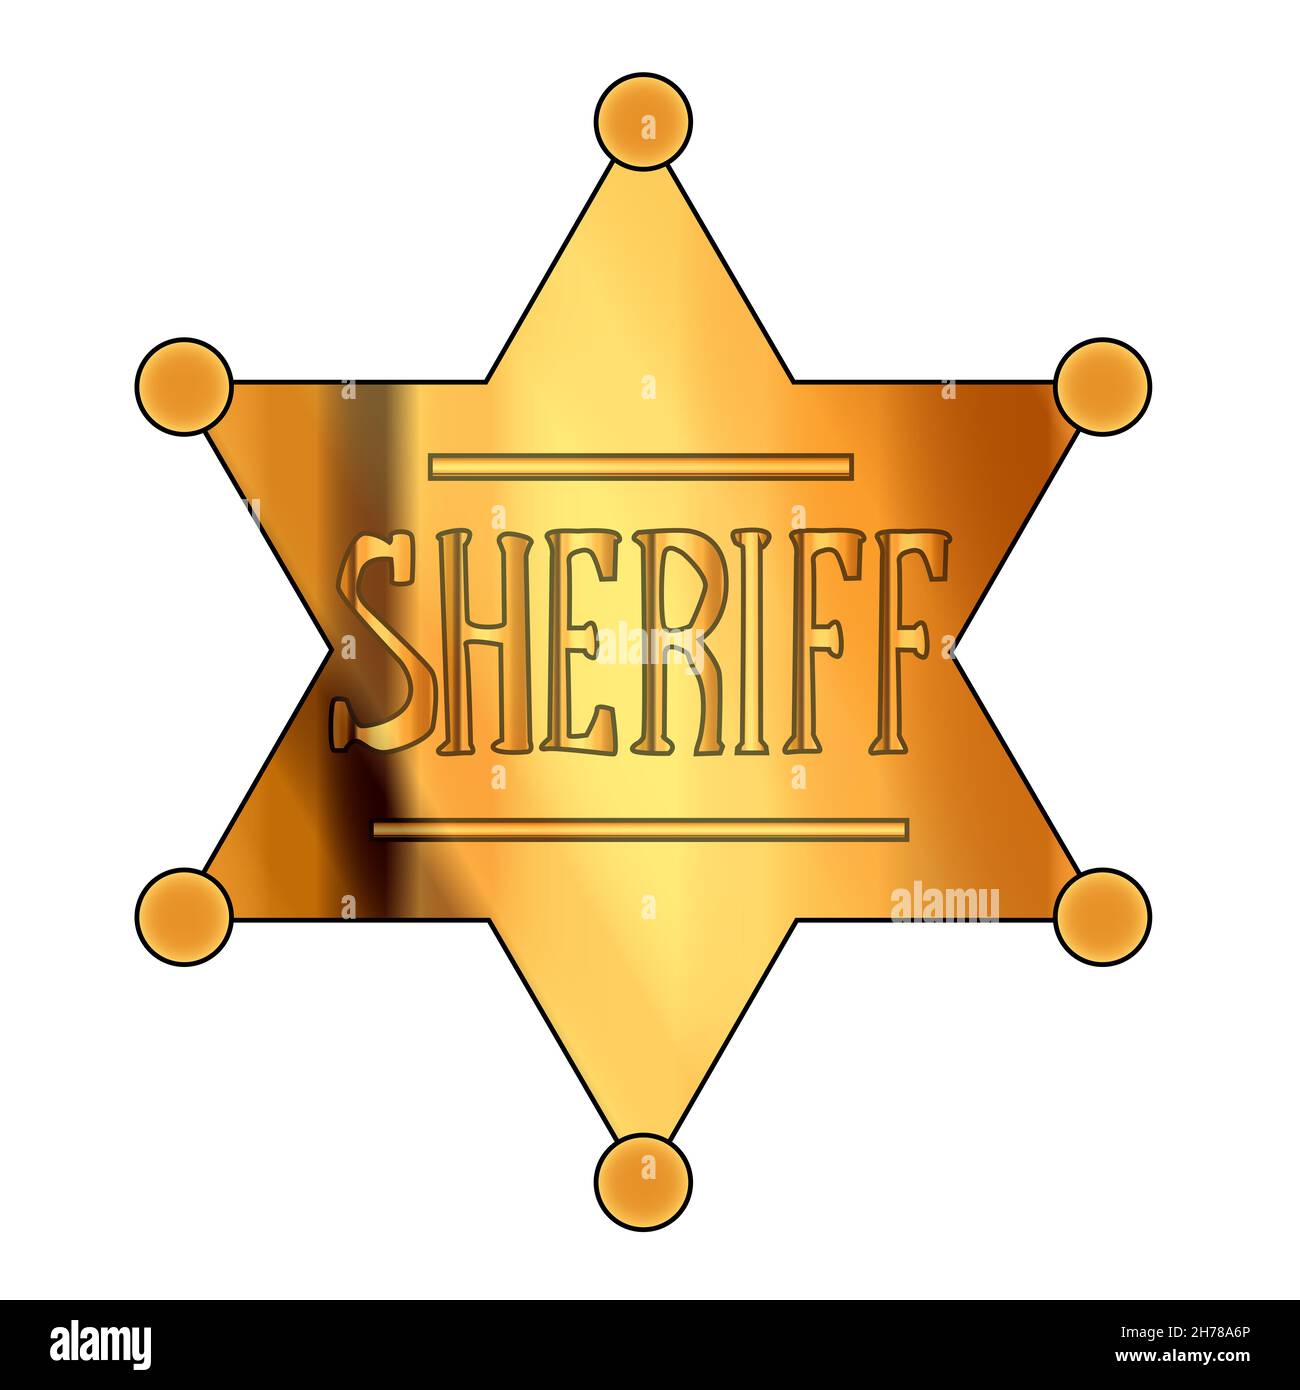 A US wild west sheriff badge. Stock Photo